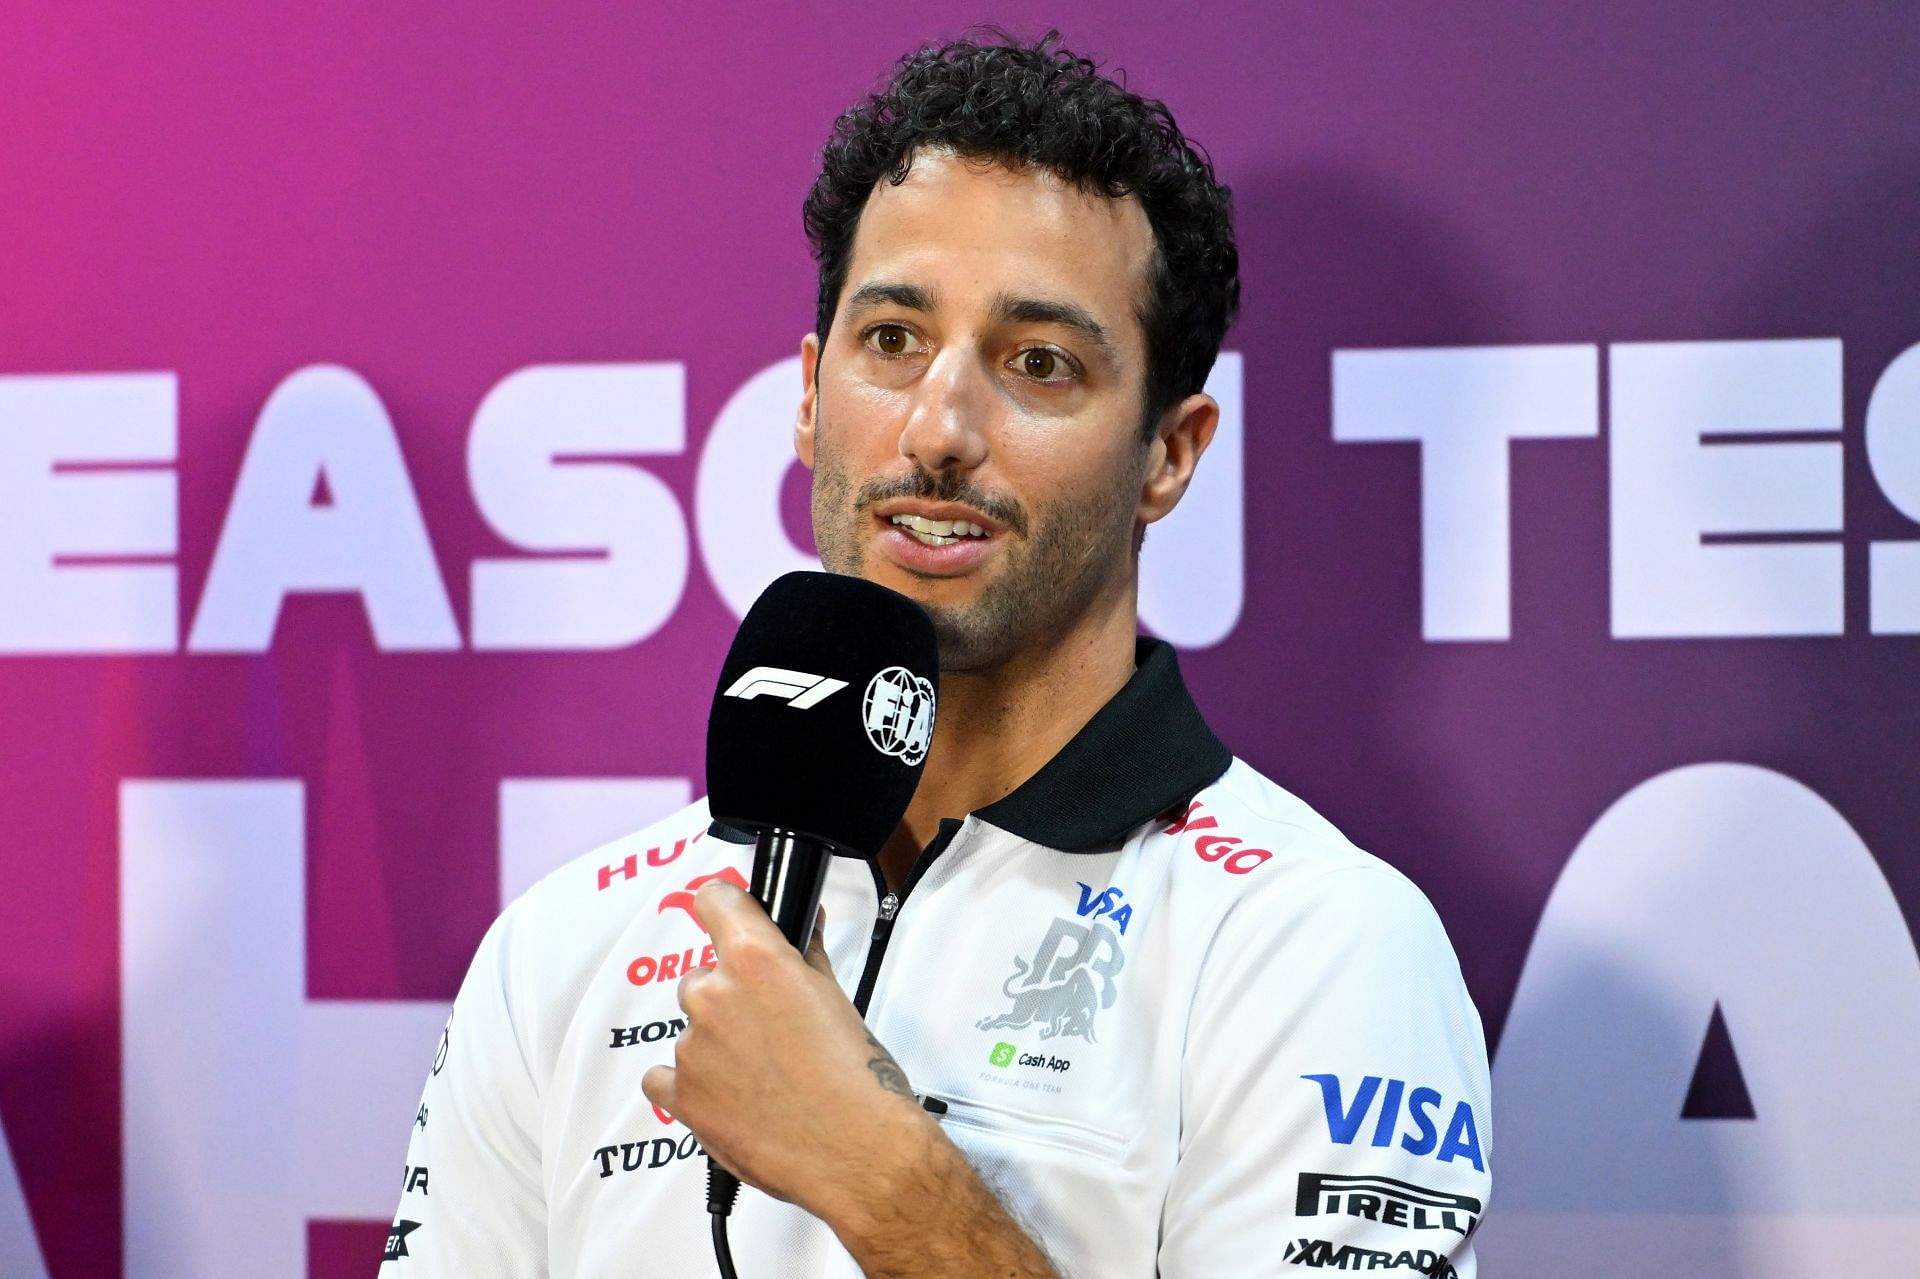 “I enjoyed missing it last year” - Daniel Ricciardo discusses his ...